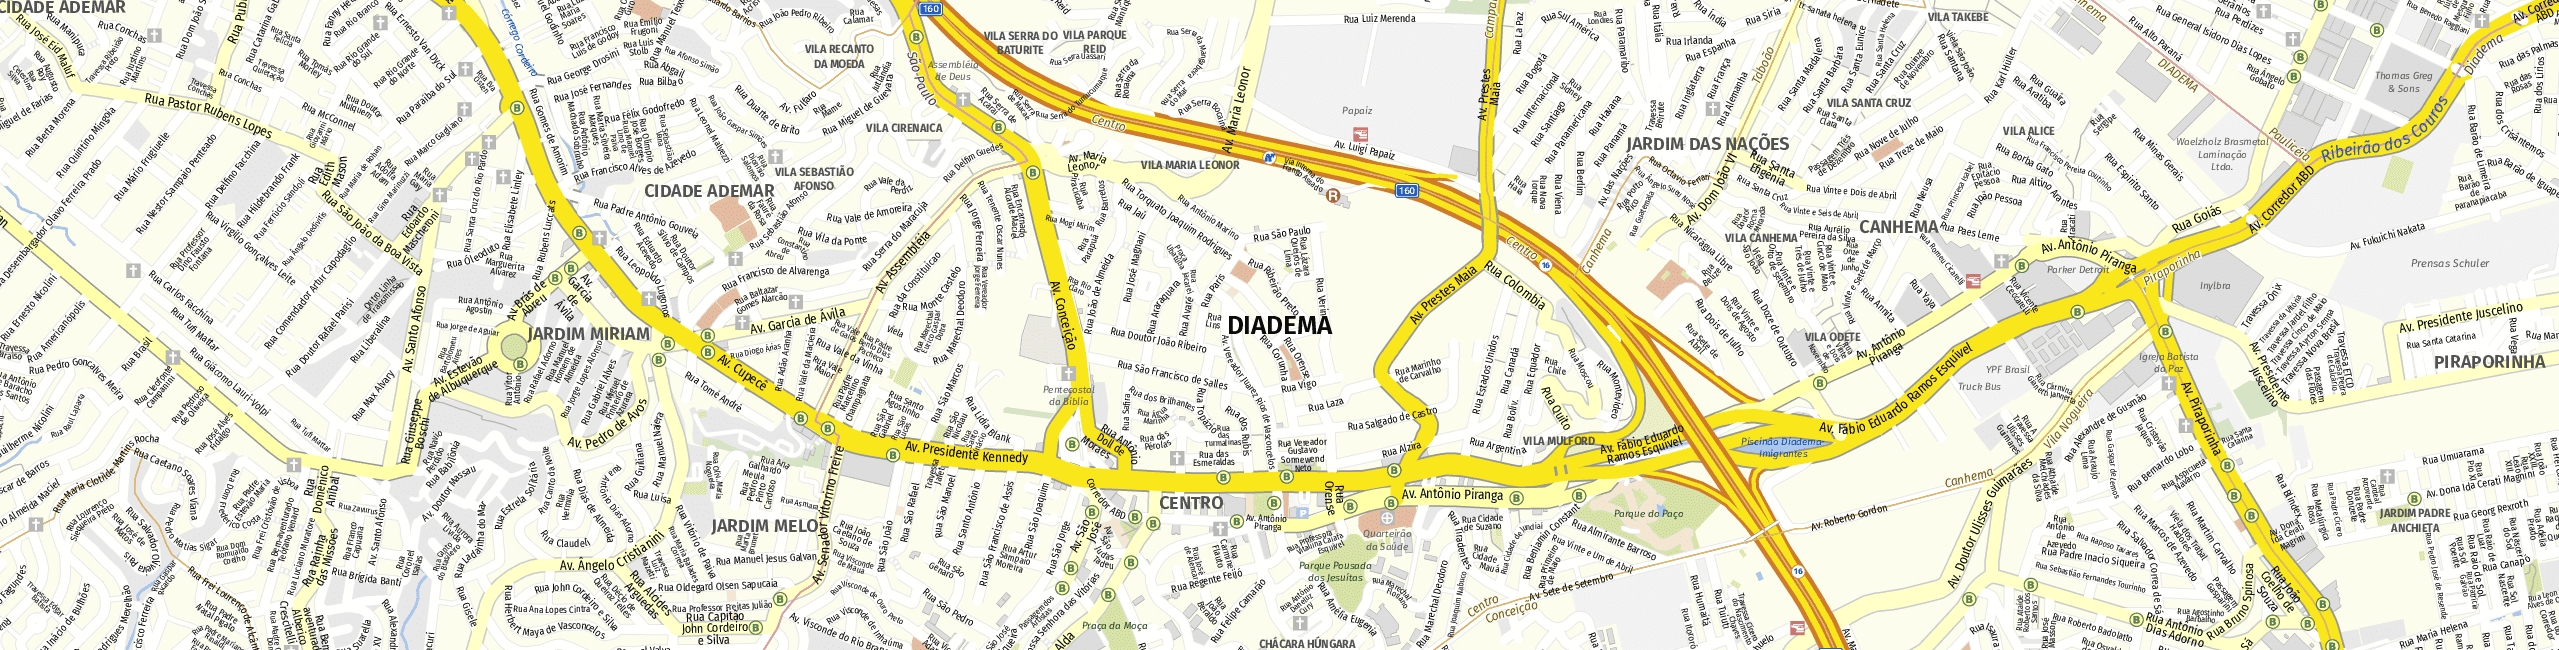 Stadtplan Diadema zum Downloaden.